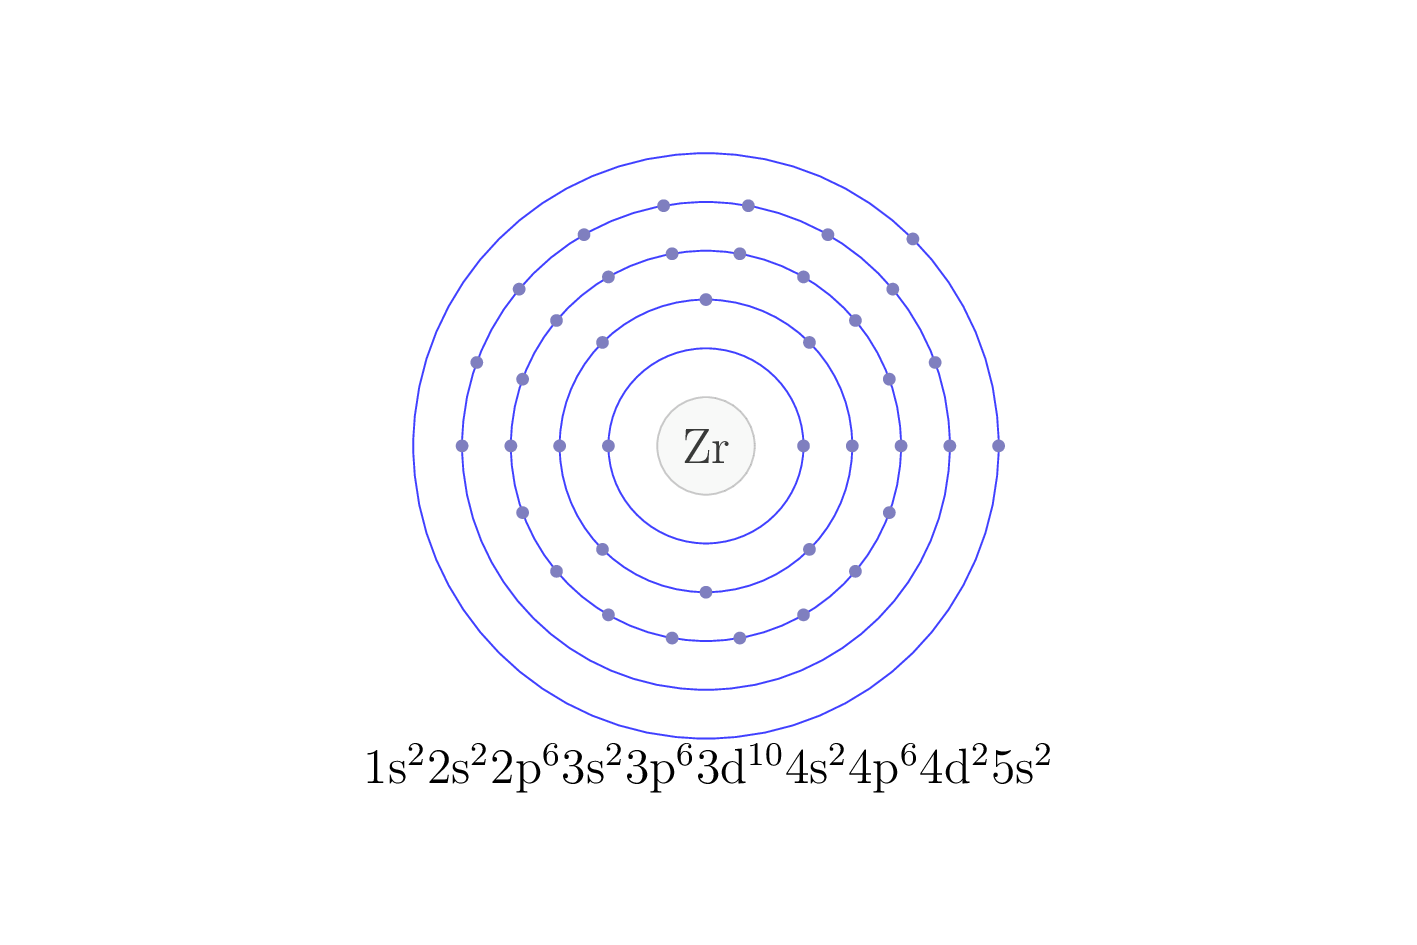 electron configuration of element Zr